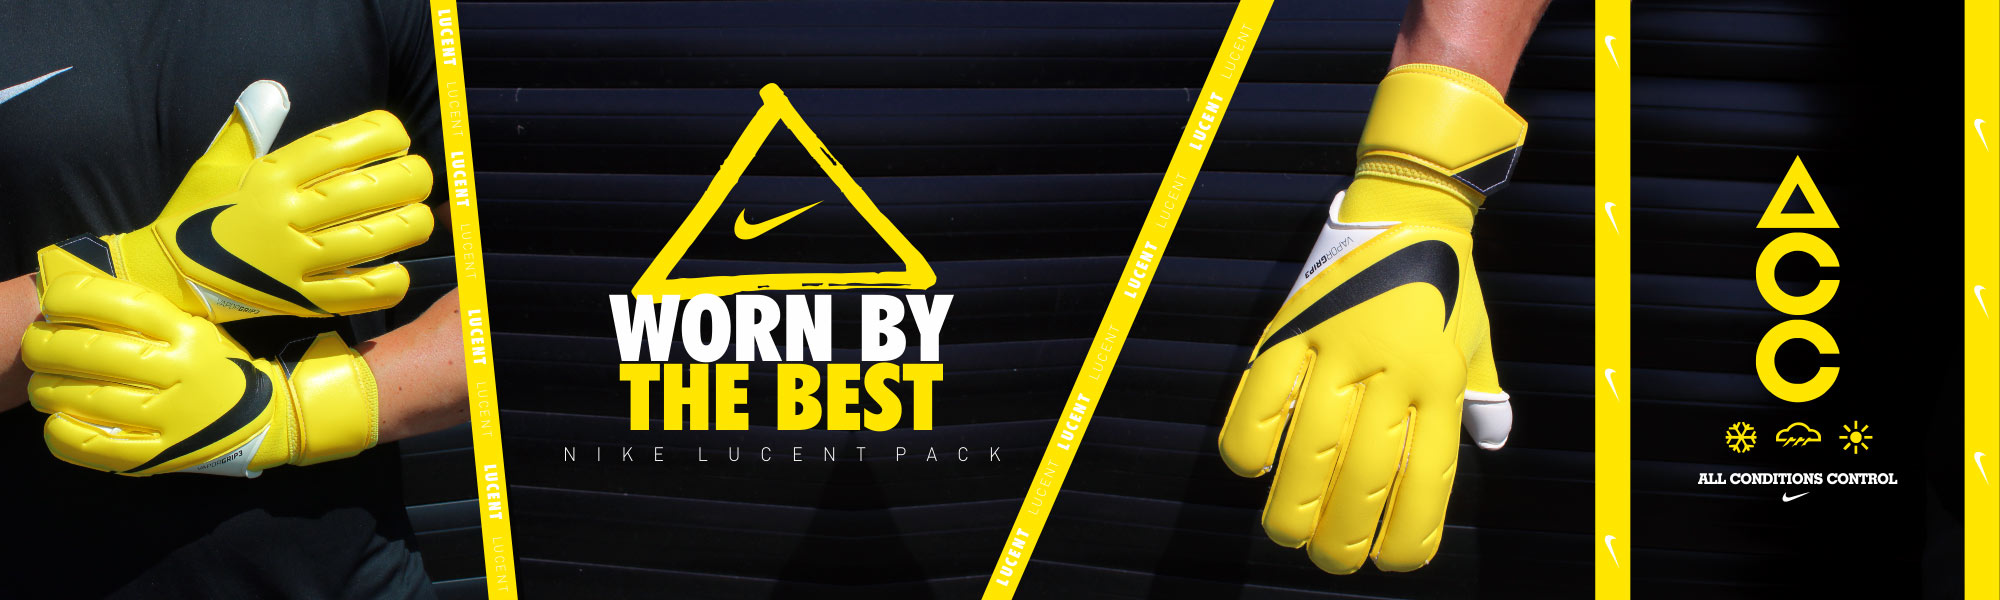 Nike Lucent Pack Goalkeeper Gloves 